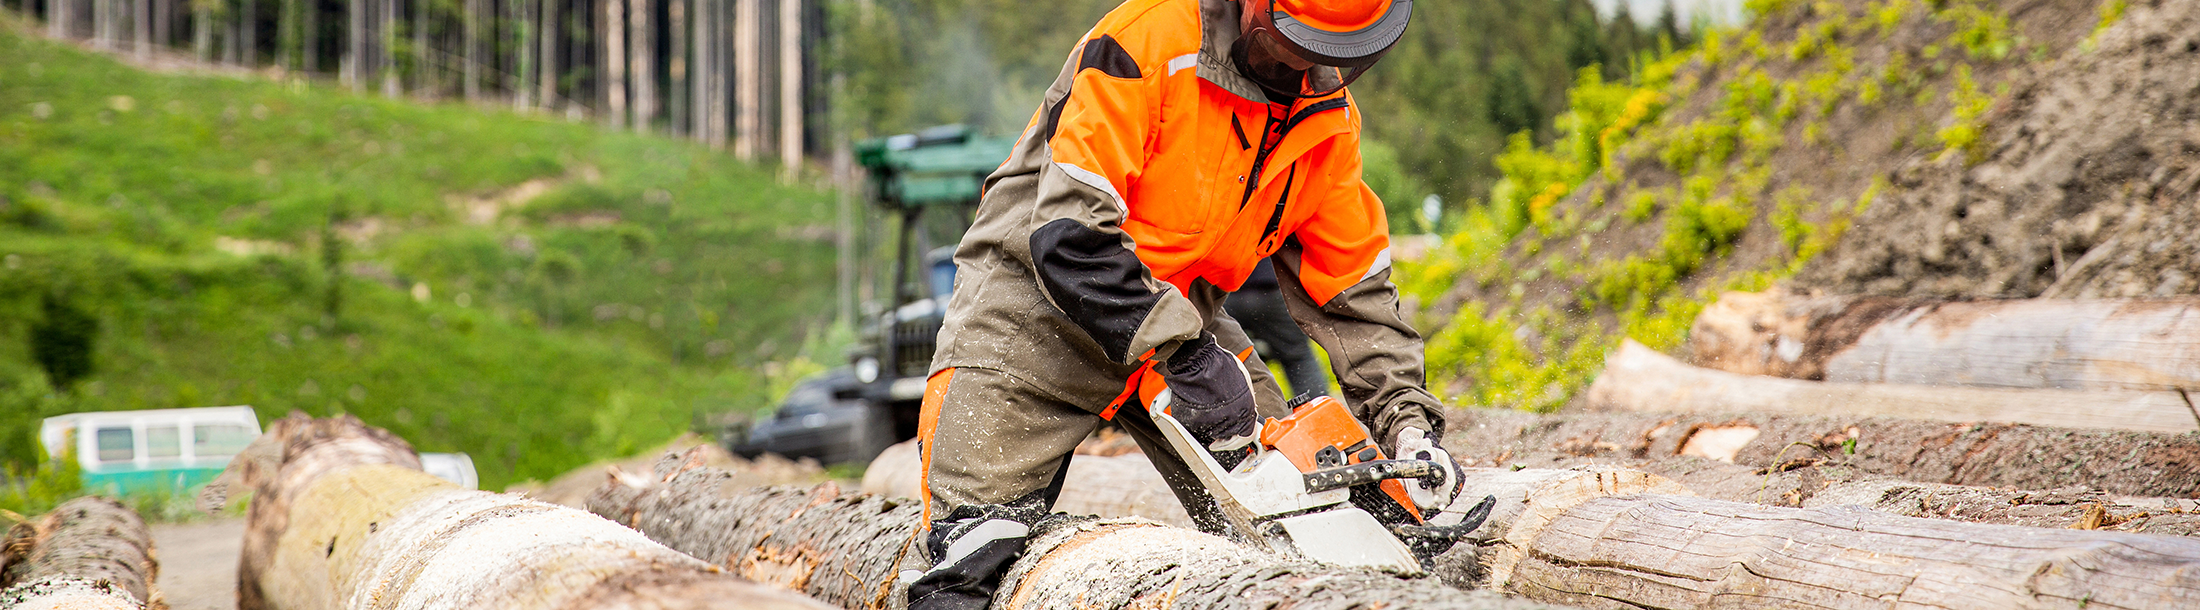 Chainsaw-Wielding Forestry Worker